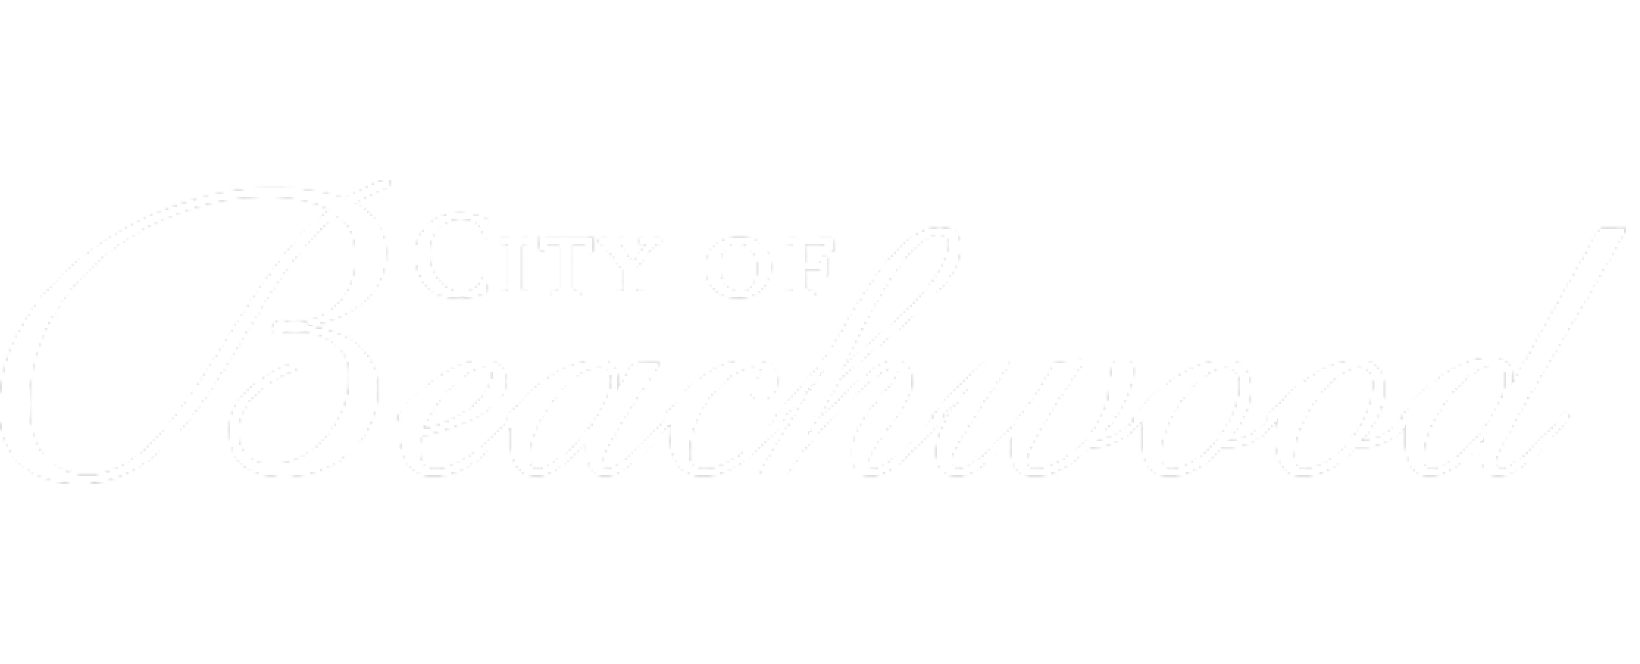 City of Beachwood logo